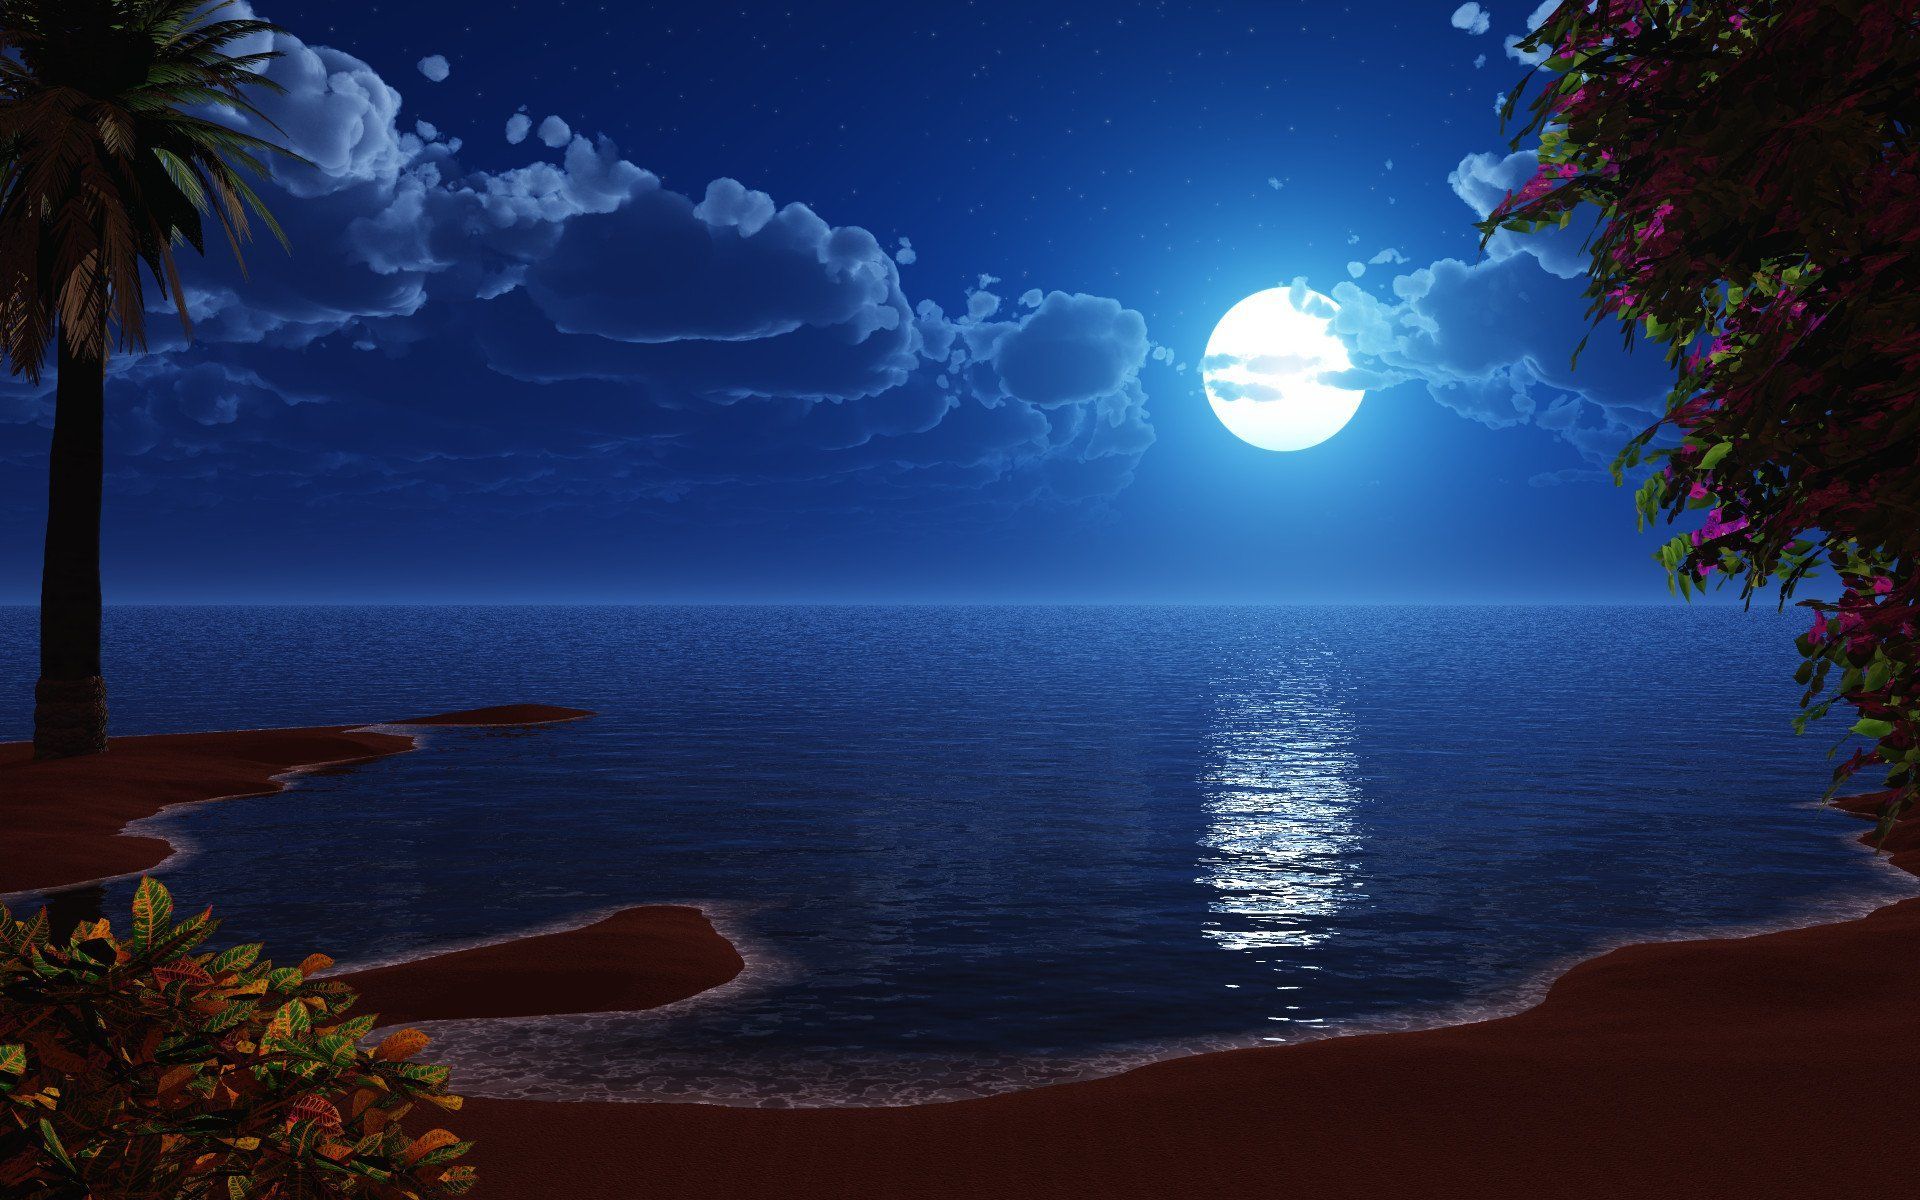 Beauty Of Moon Definition Wallpaper. Ocean at night, Beach at night, Beach night